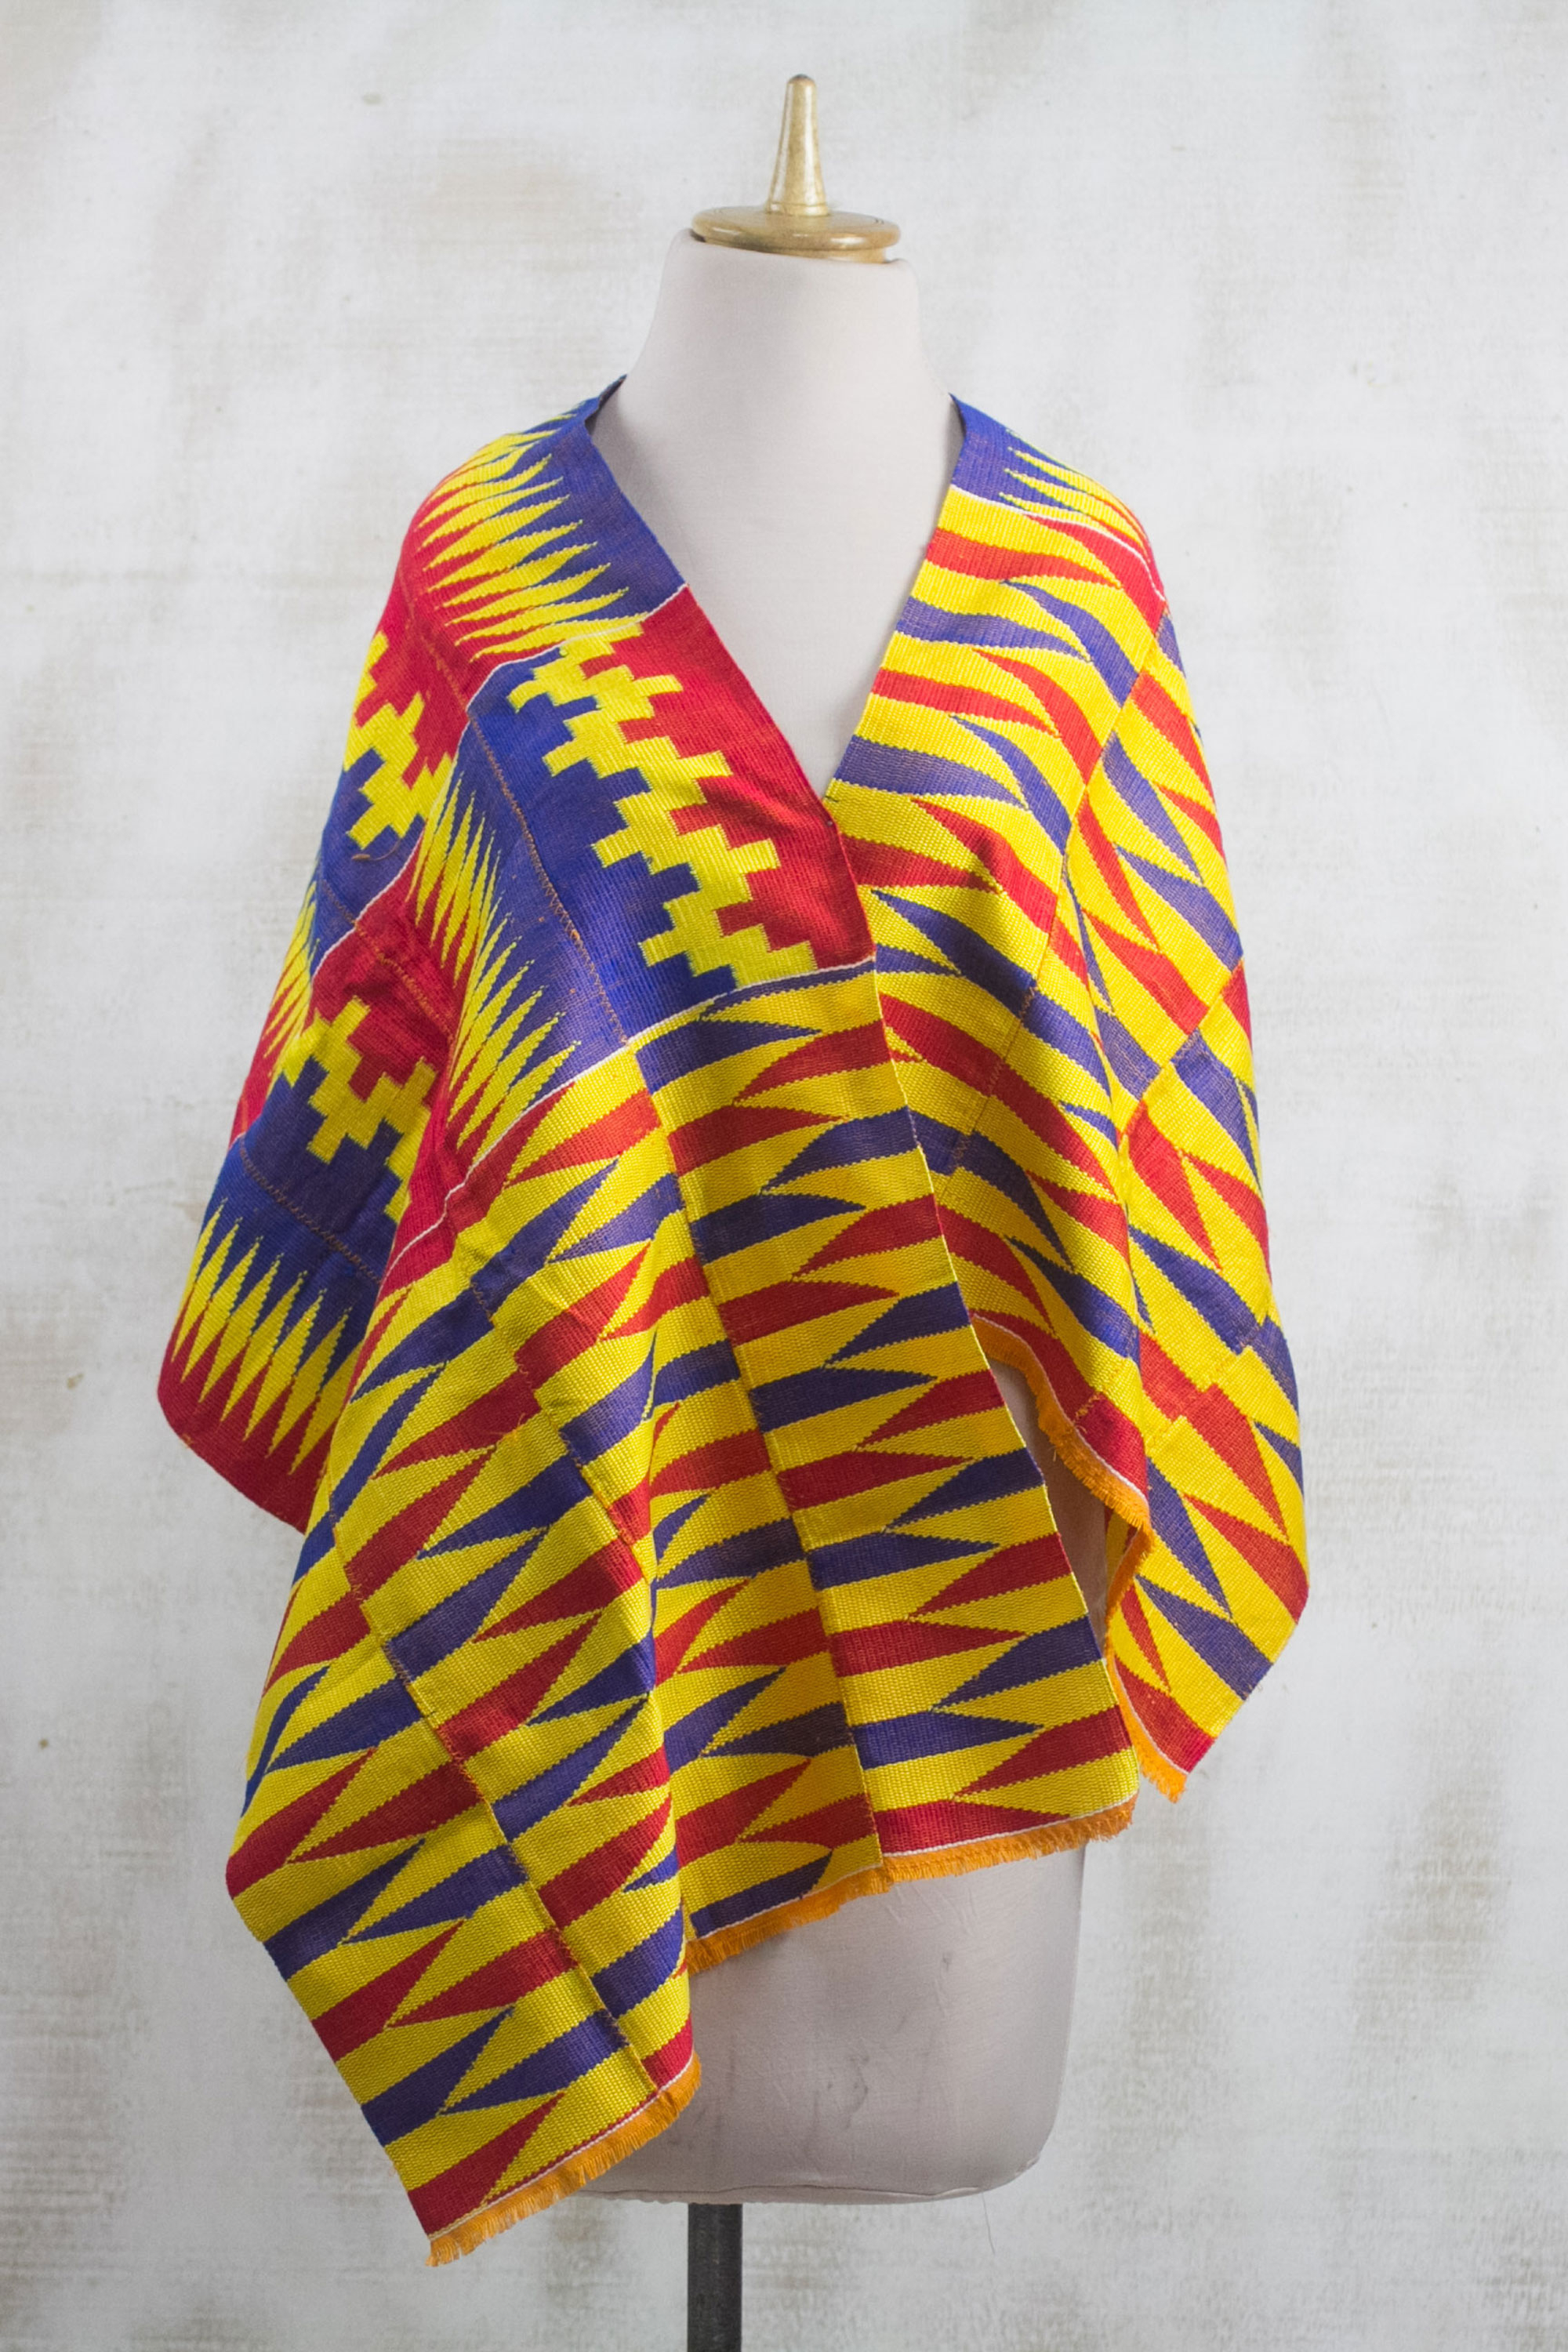 Kente Cloth Ghana African Handwoven fabric and 50 similar items